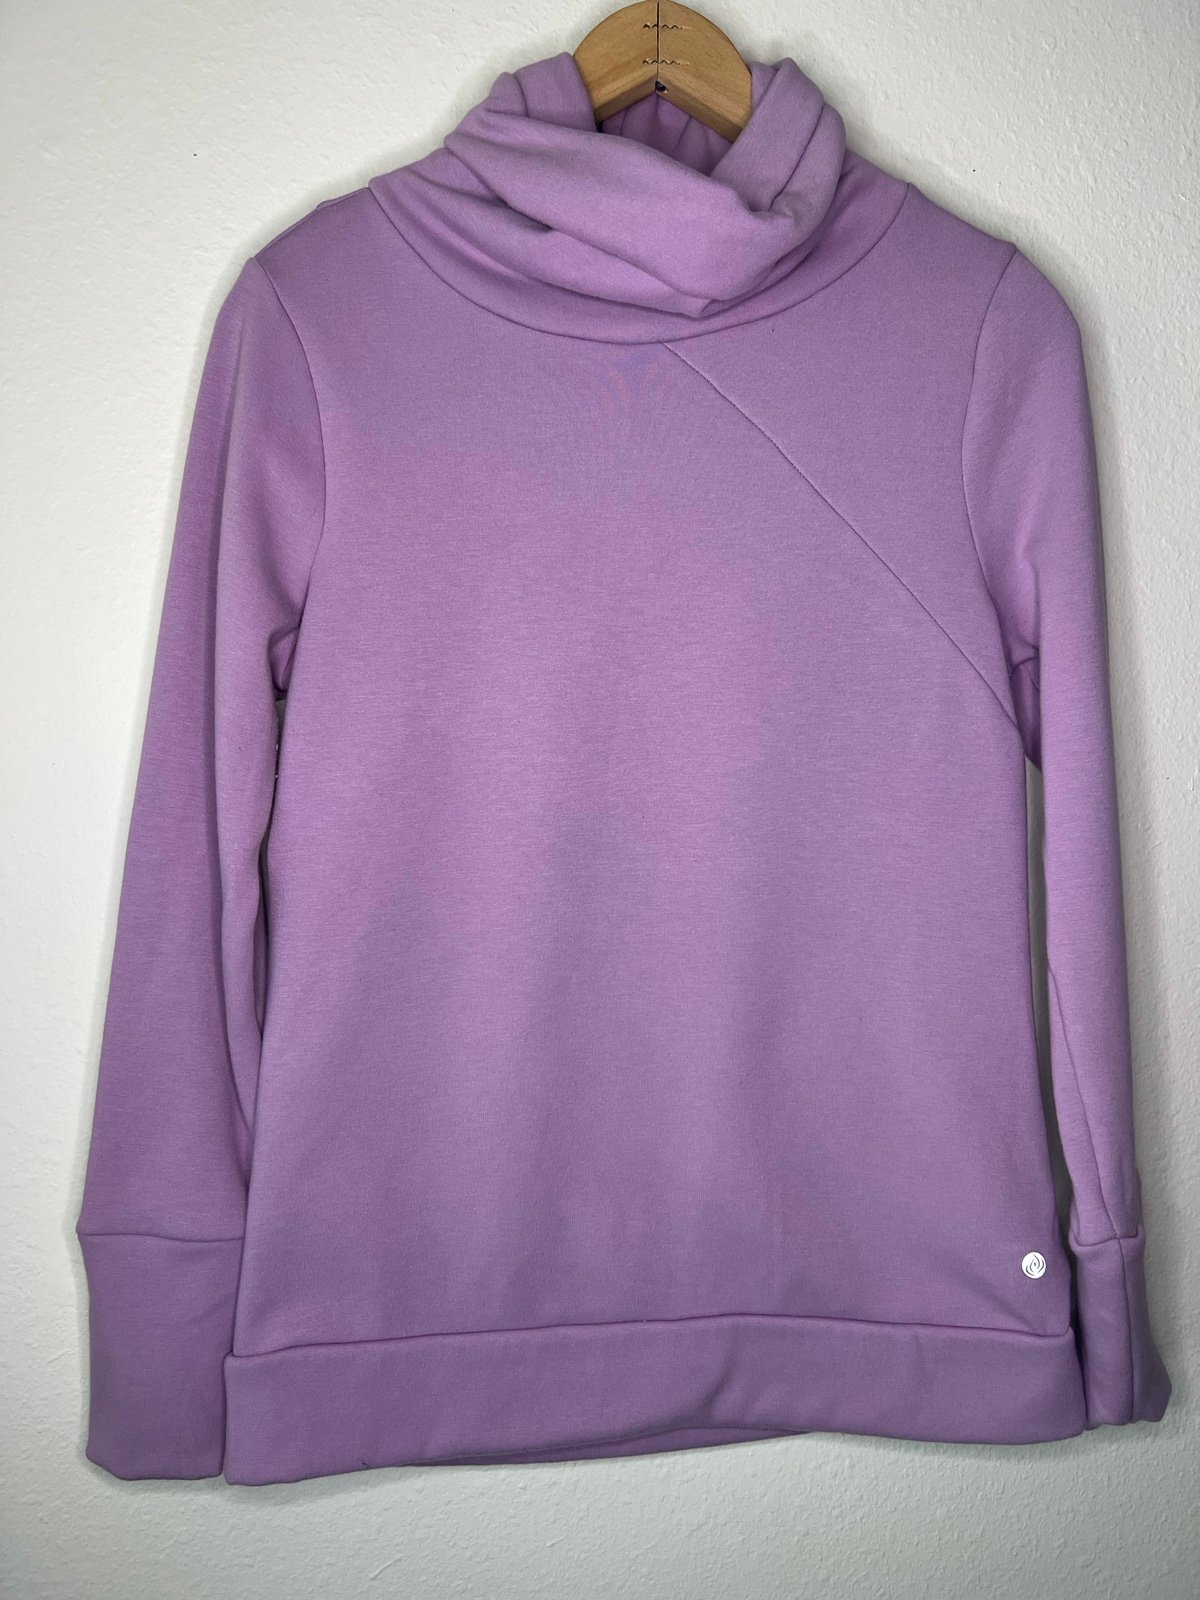 Authentic Apana Light Purple Sweatshirt size S M1Zm02odM US Sale